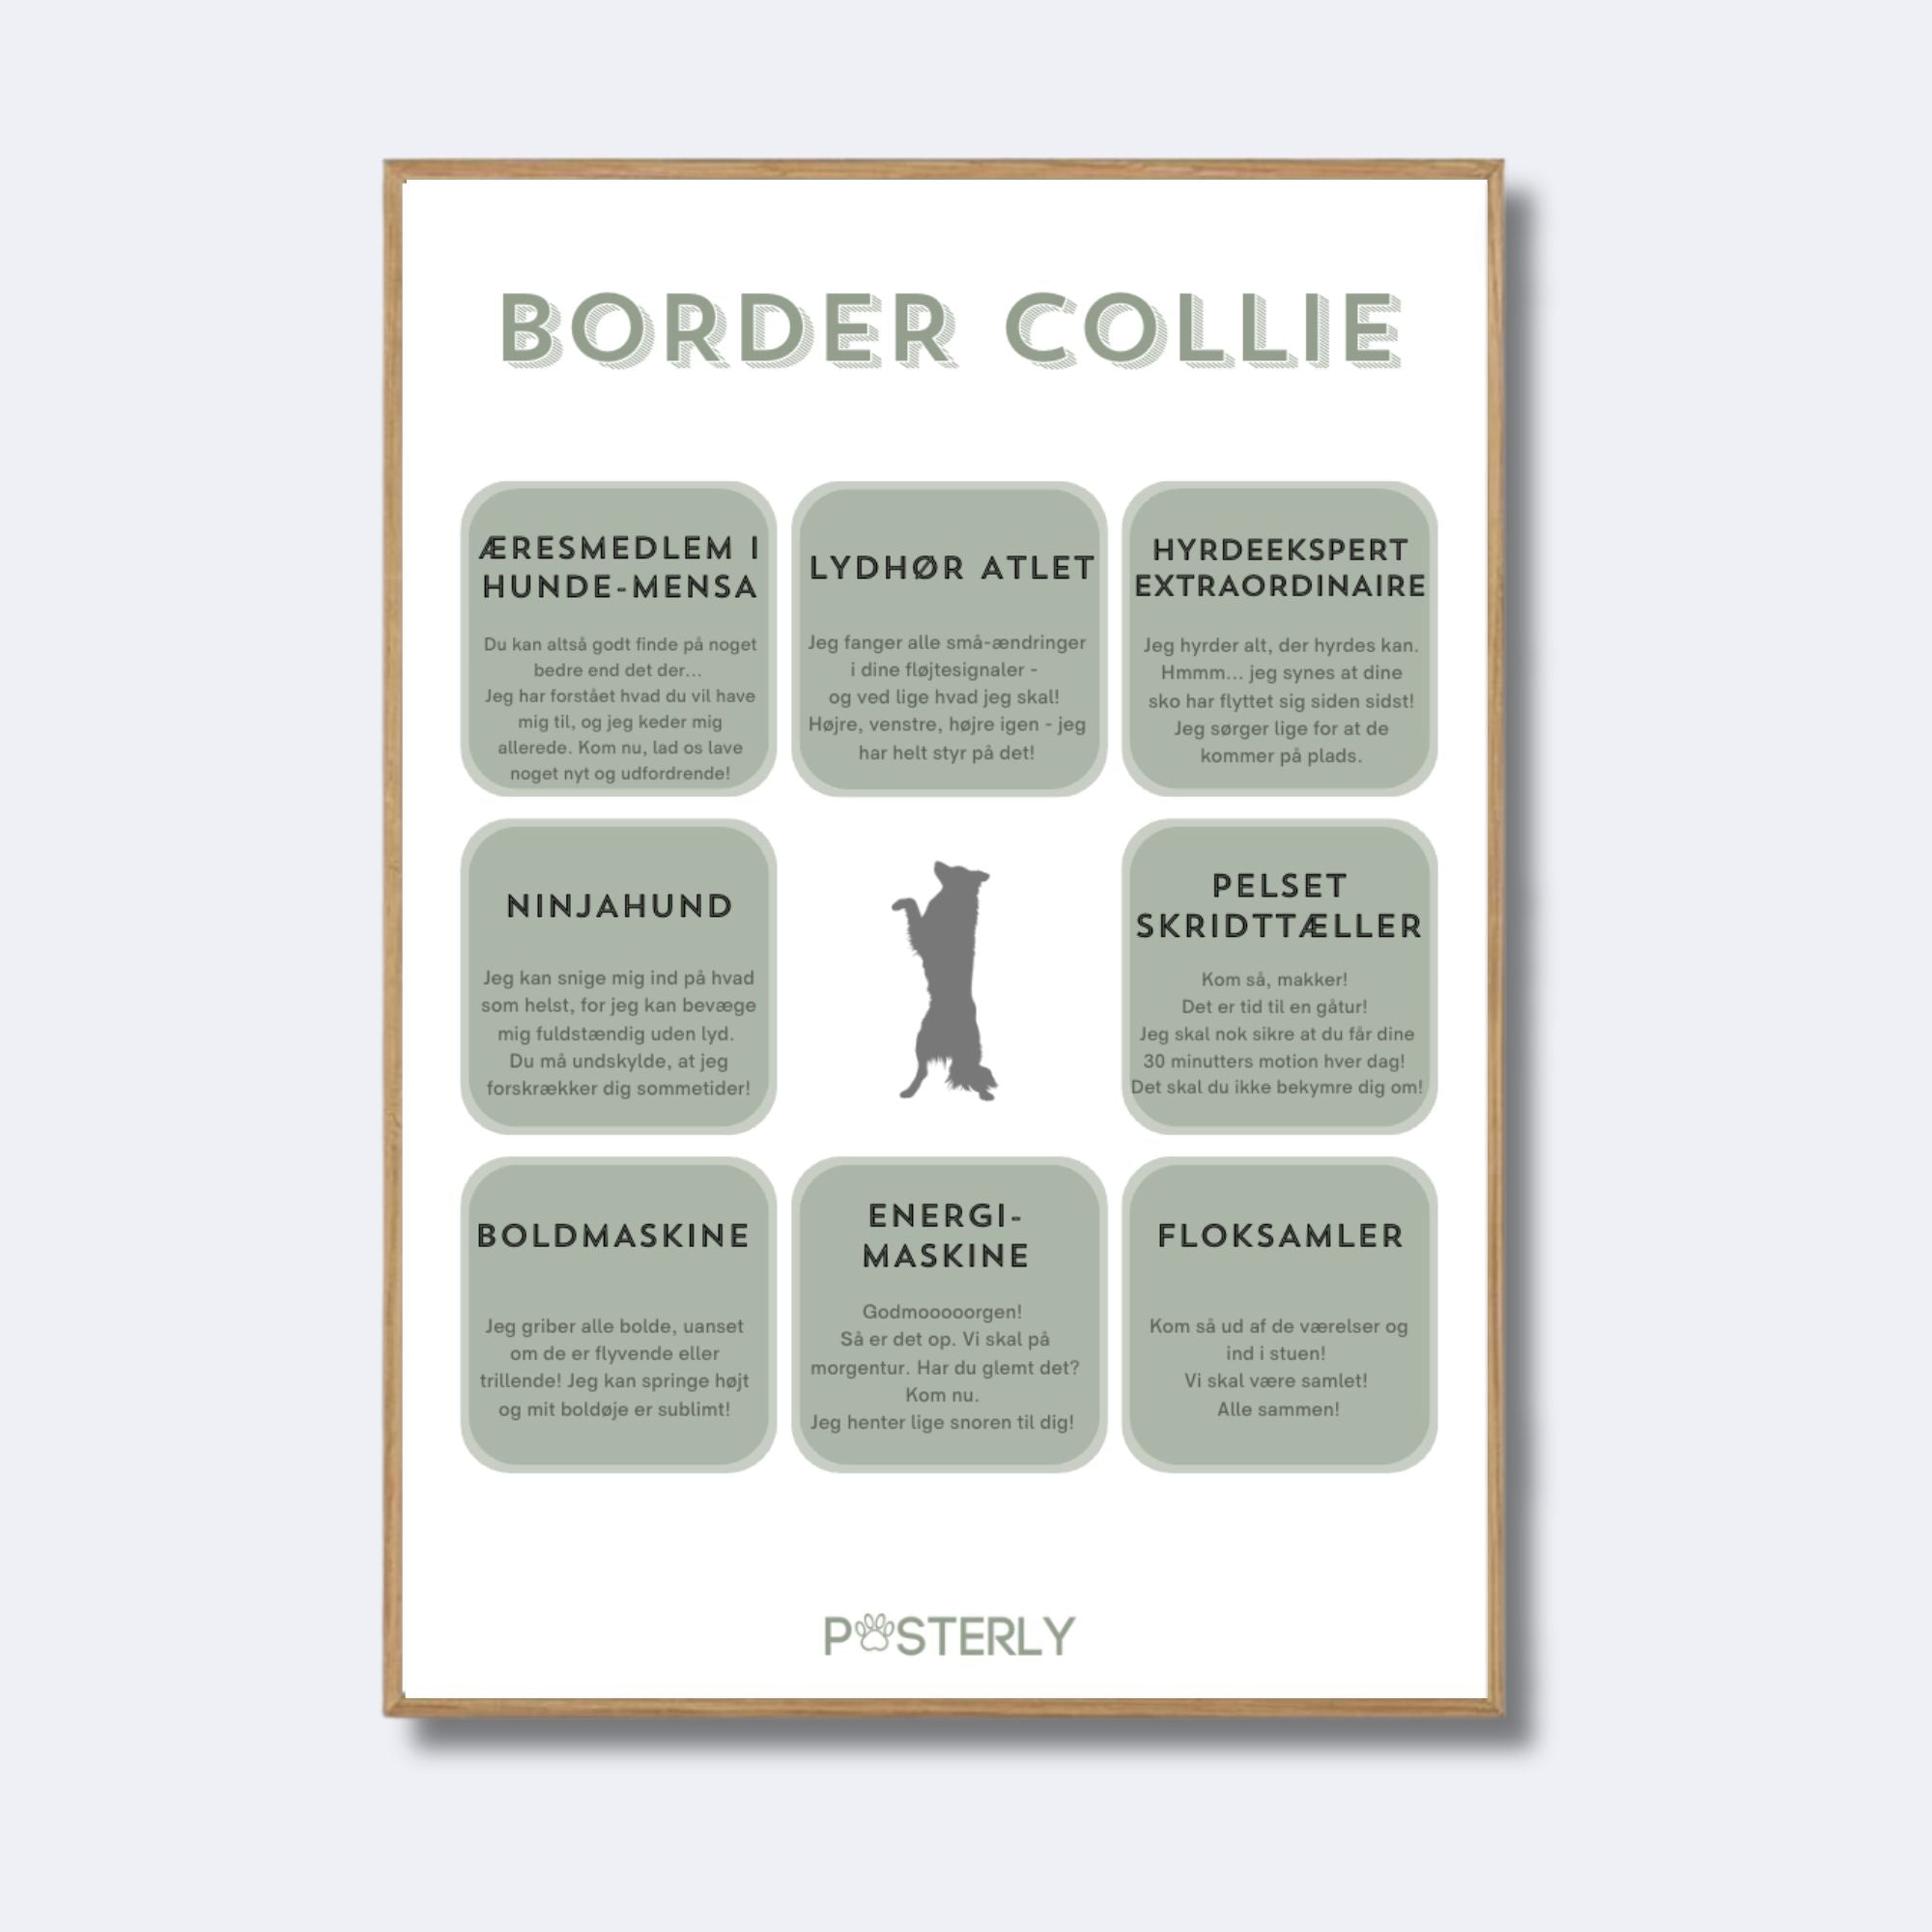 Border Collie karakteristika-plakat